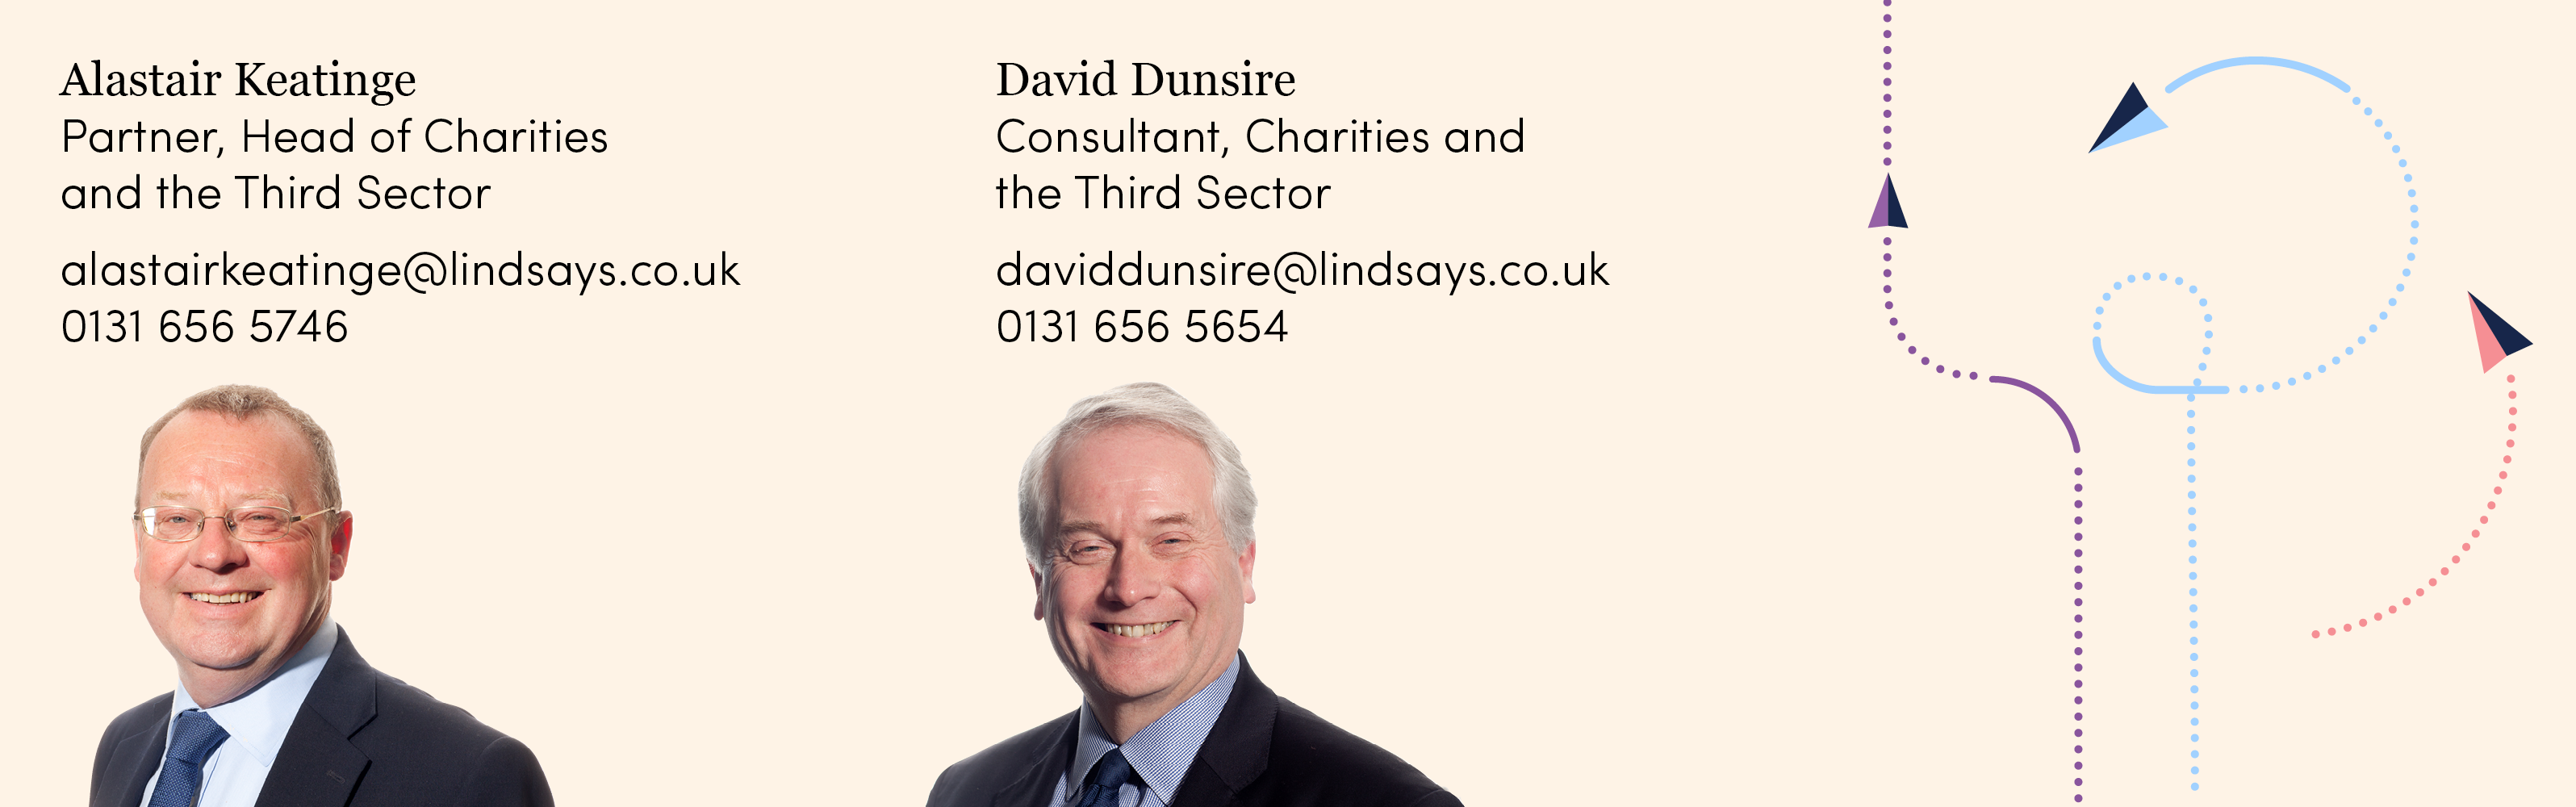 LL21-Charities-Alastair-Keatinge-and-David-Dunsire.png#asset:15092